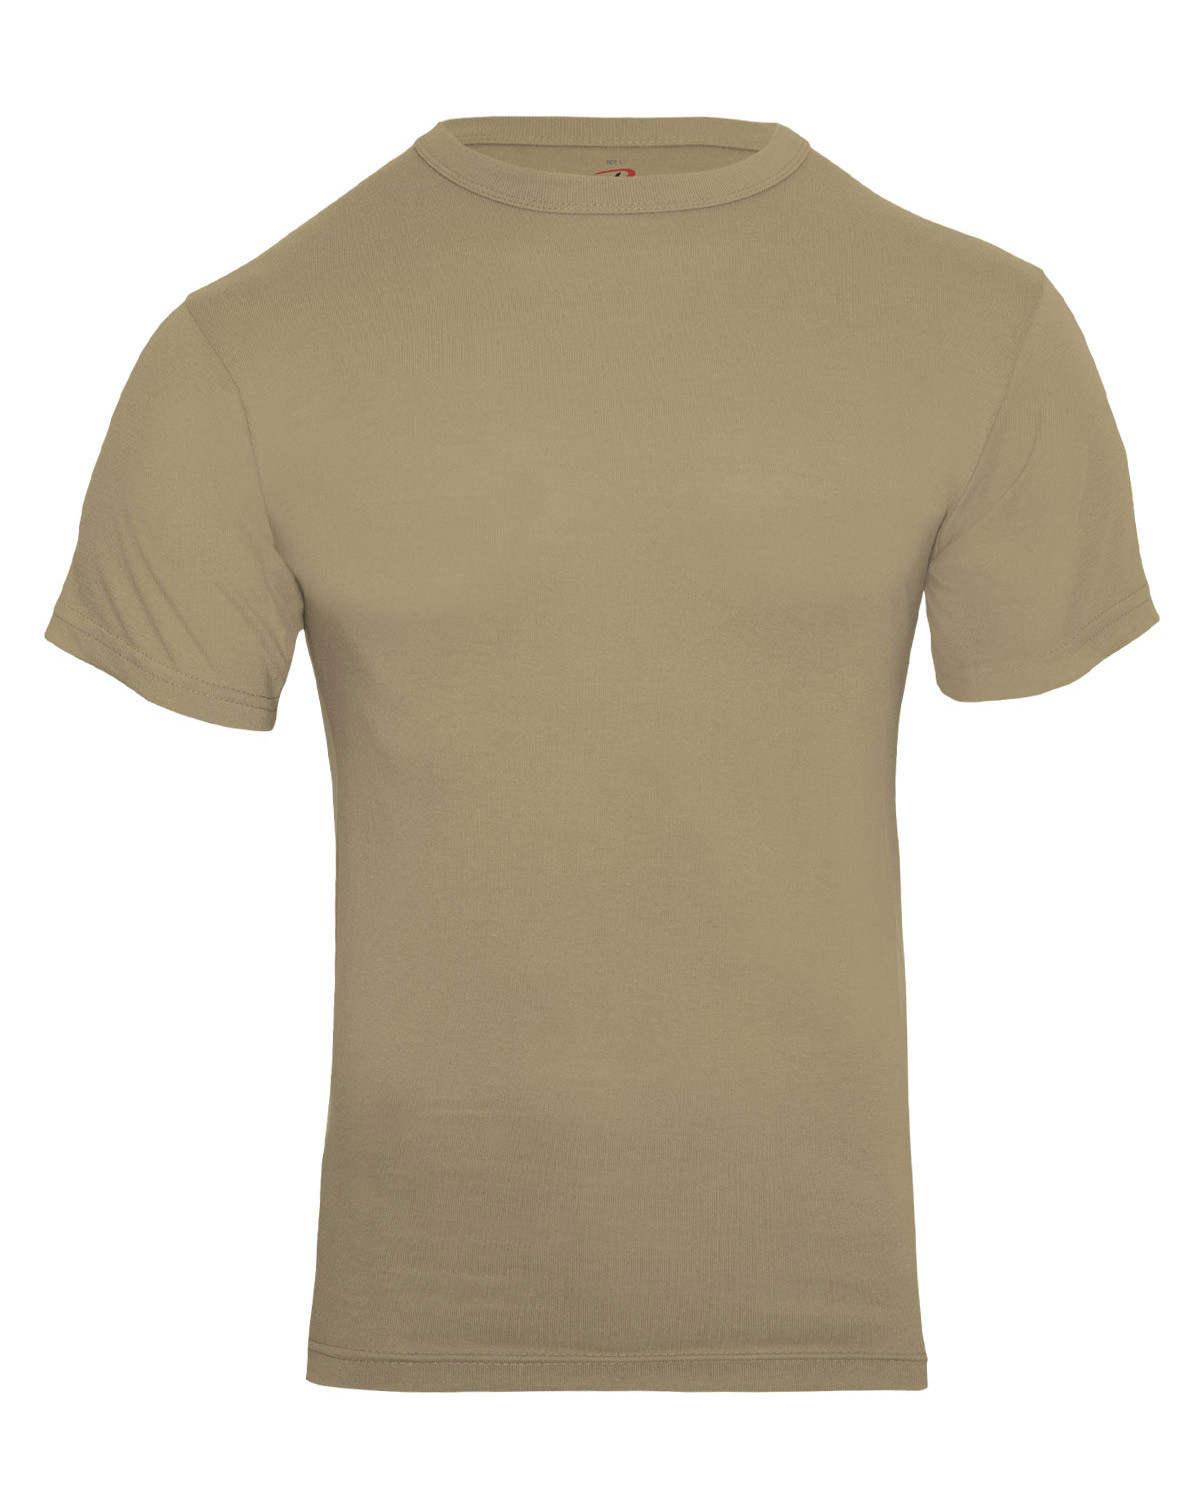 Rothco Army T-Shirt - Poly/Bomuld (Khaki, 2XL)